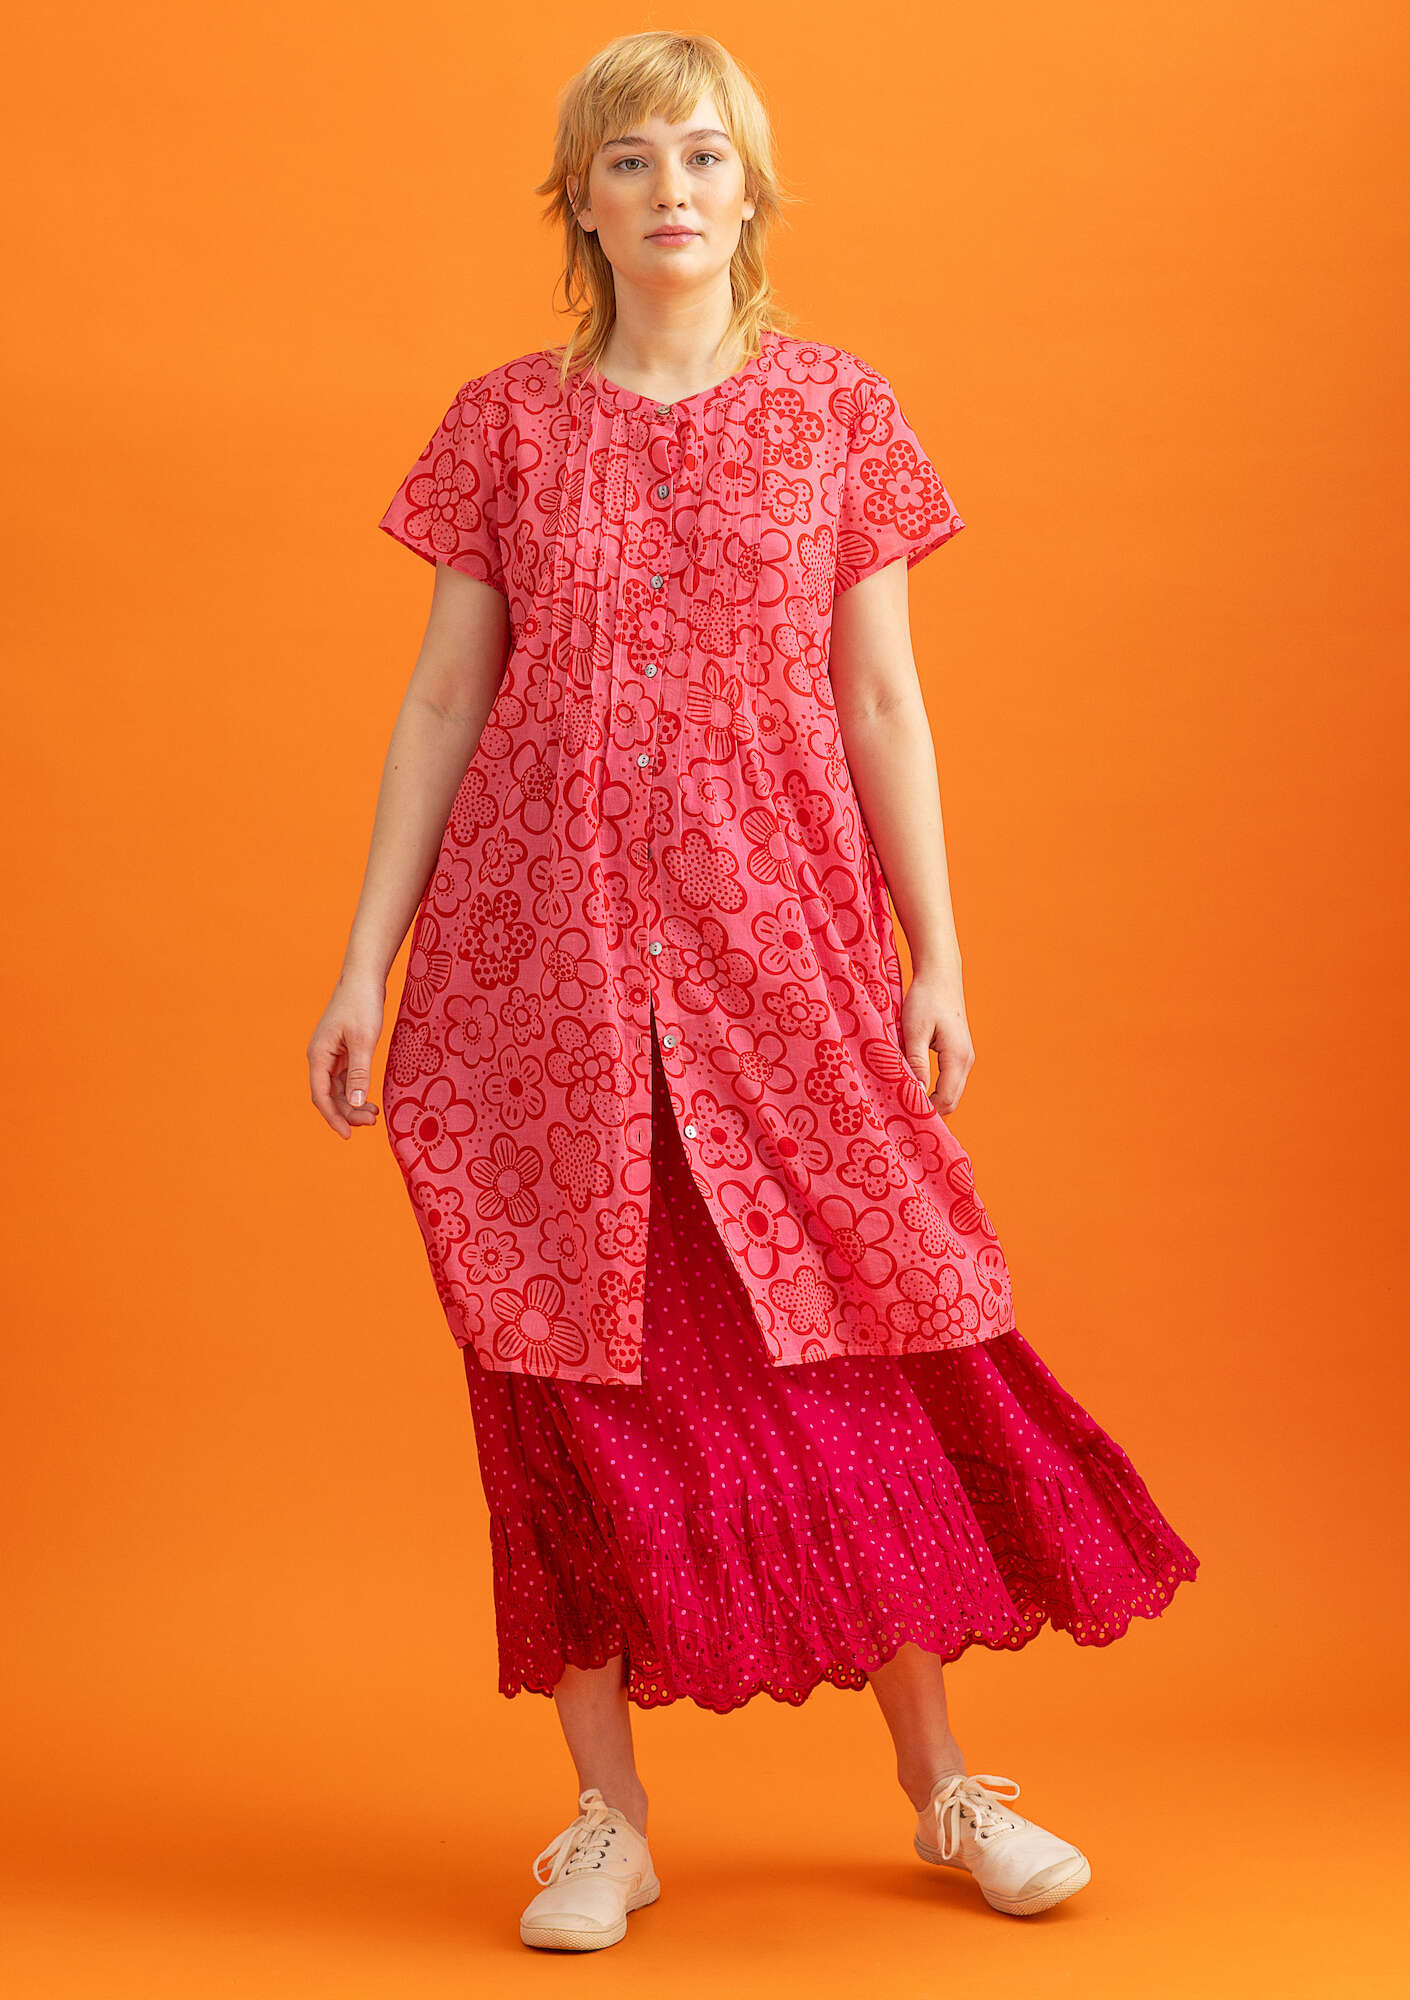 Woven dress flamingo/patterned